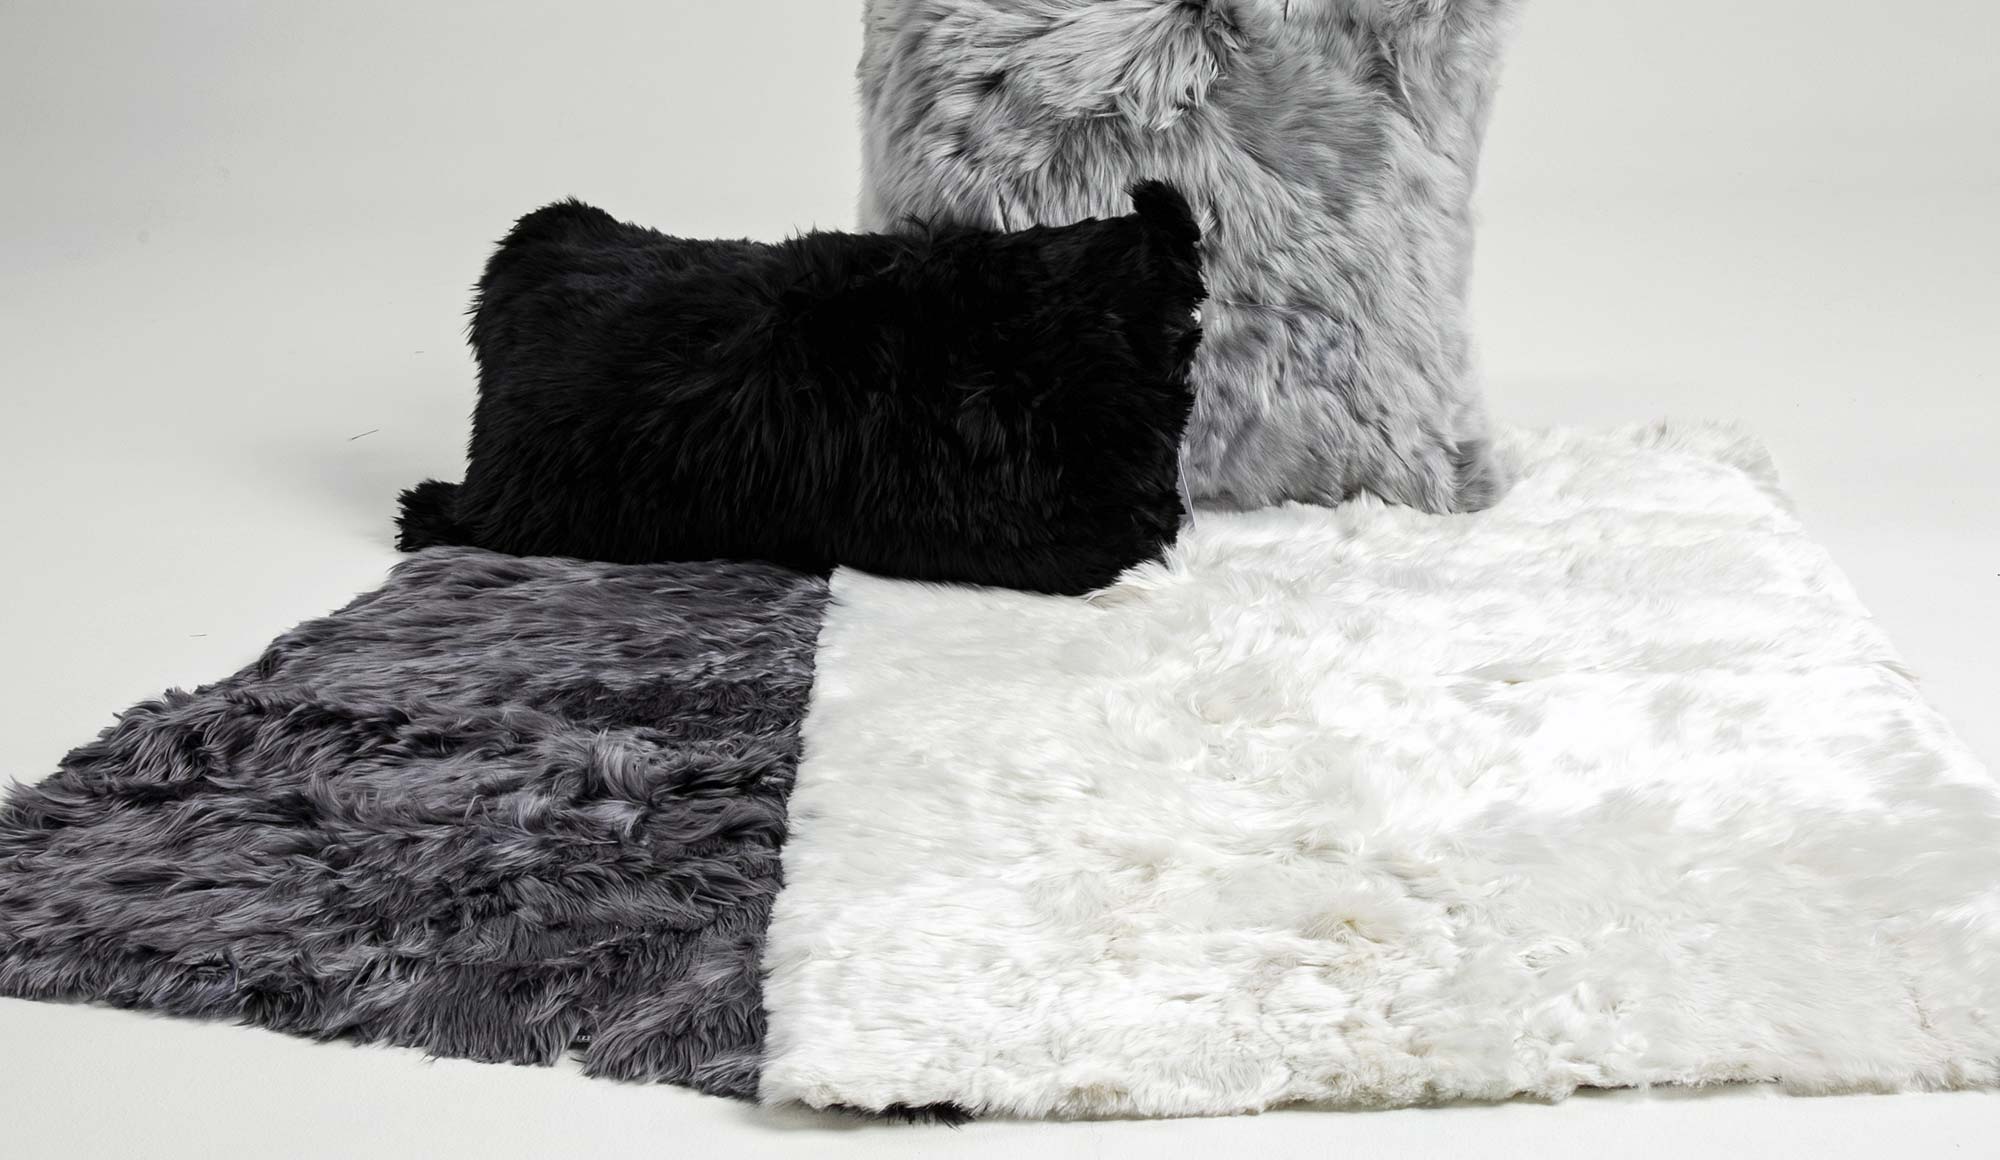 Underscore Dark Grey 40x60cm Alpaca & Lambs Wool Cushion Cover